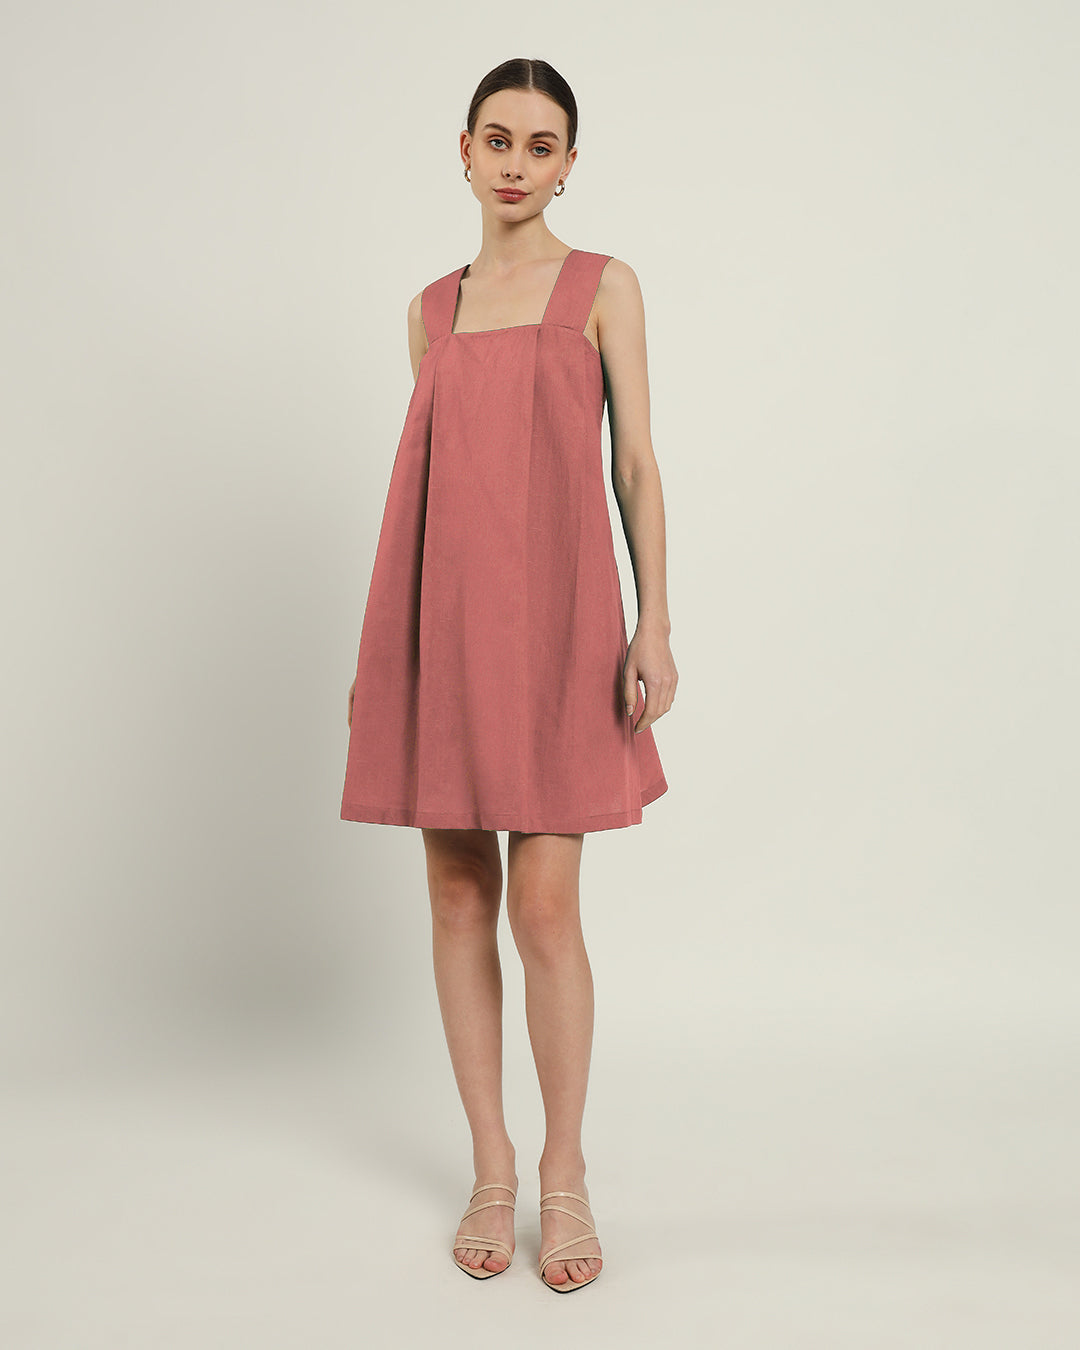 The Larissa Ivory Pink Dress